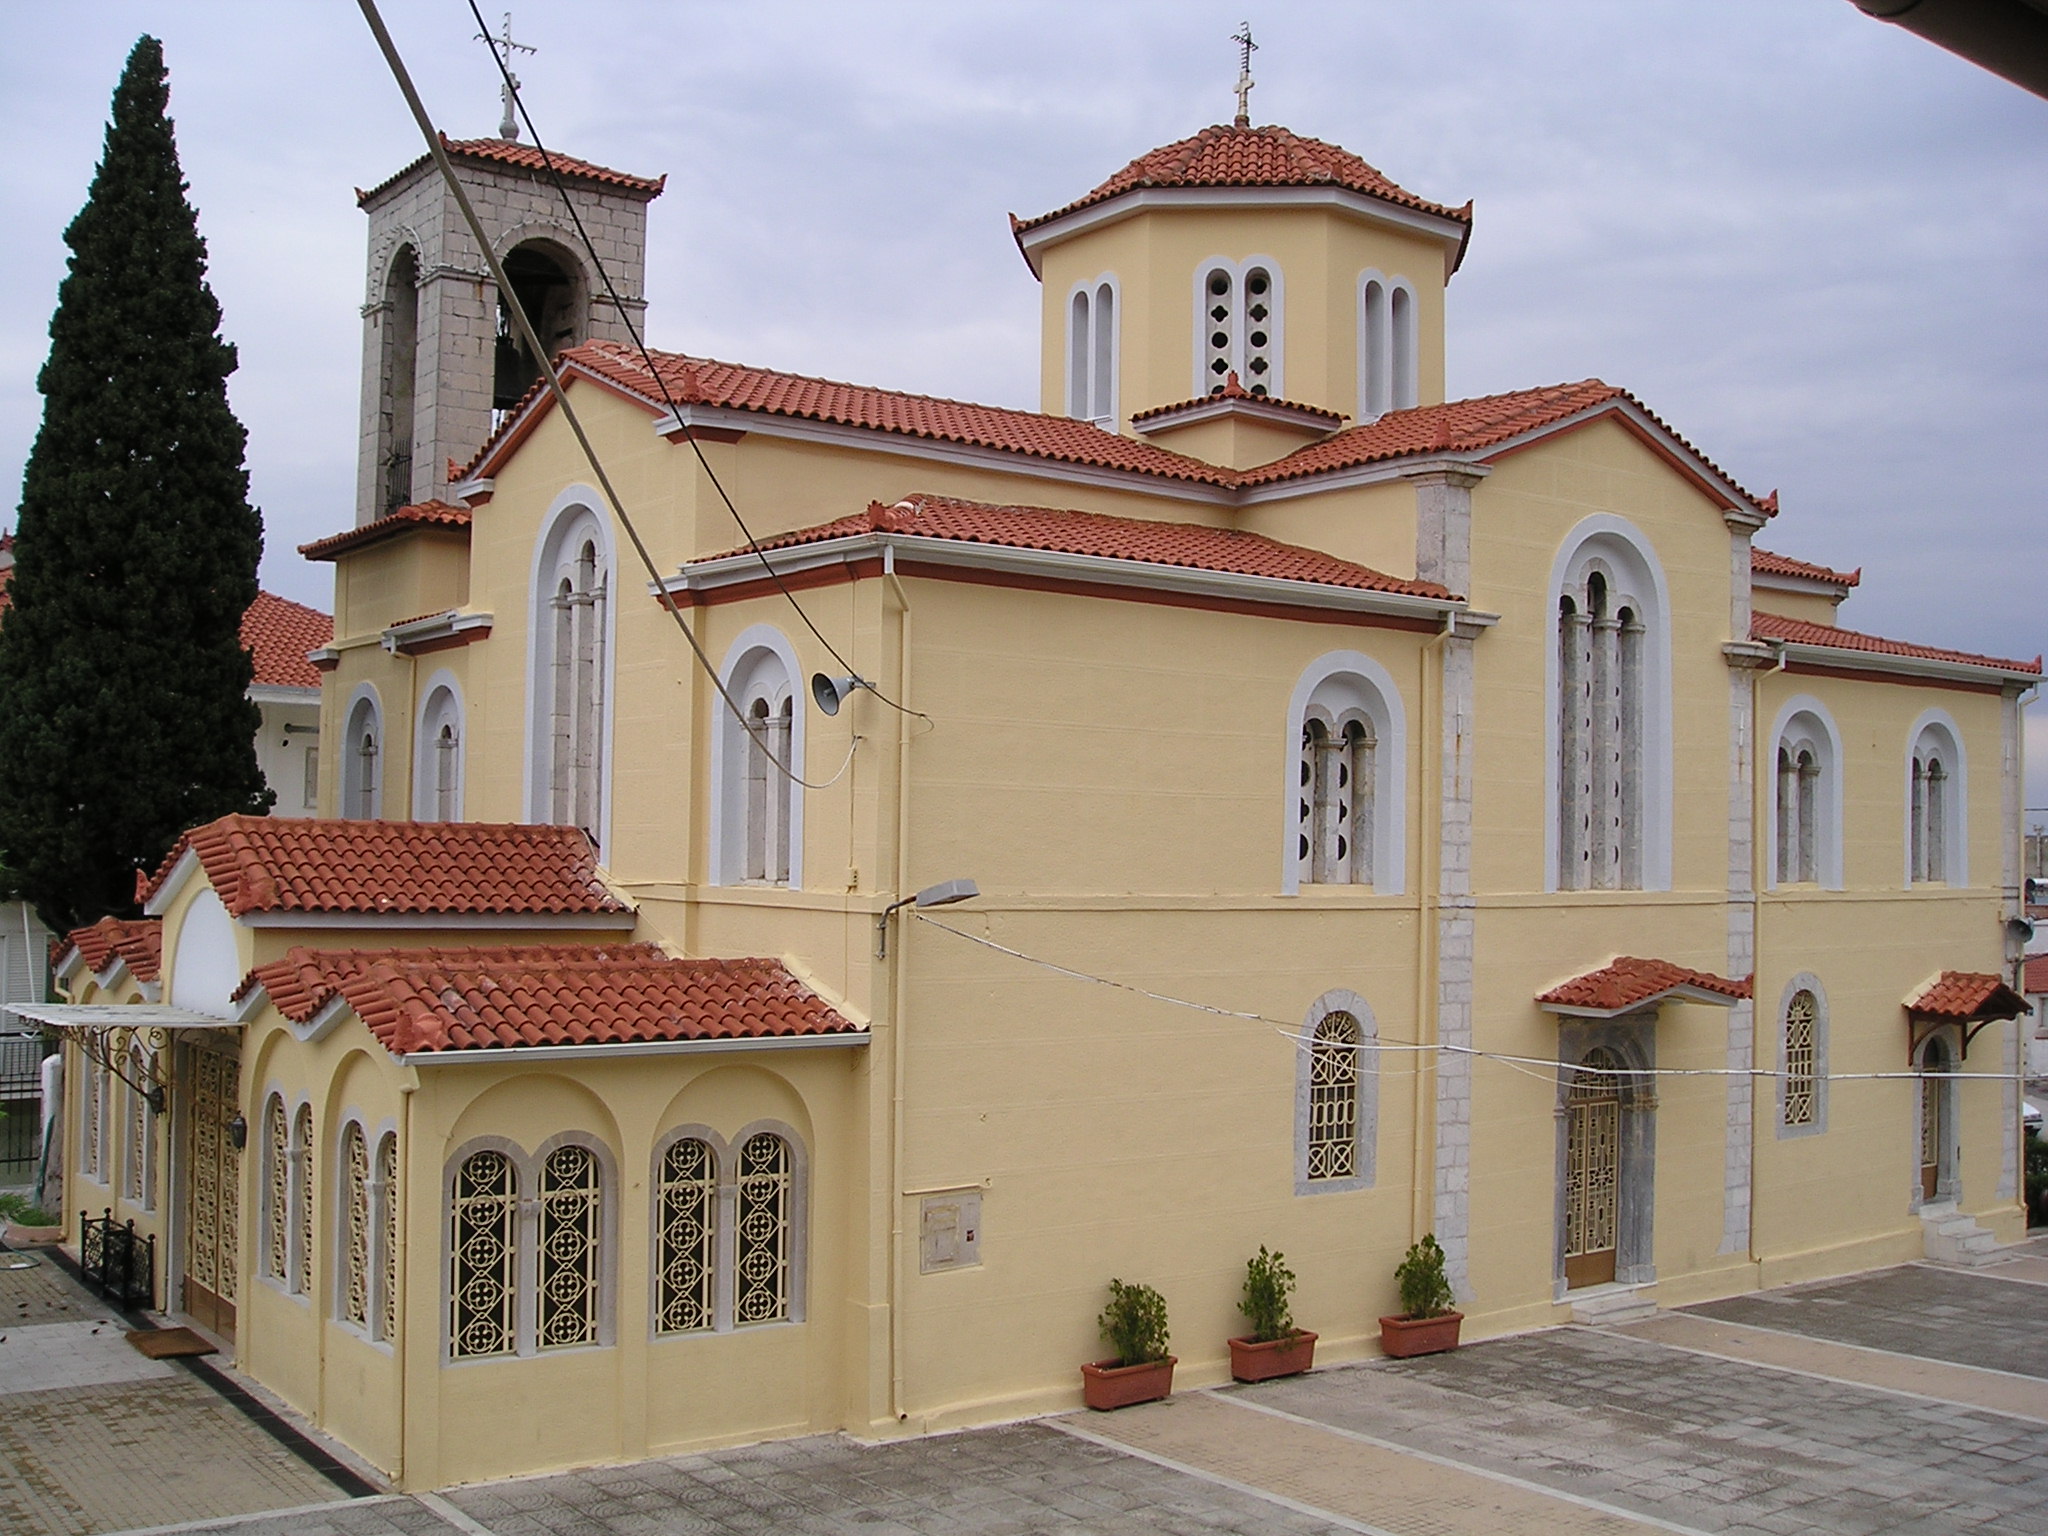 GREEK OTHODOX CHURCH OF EVANGELISTRIA IN LIVADEIA